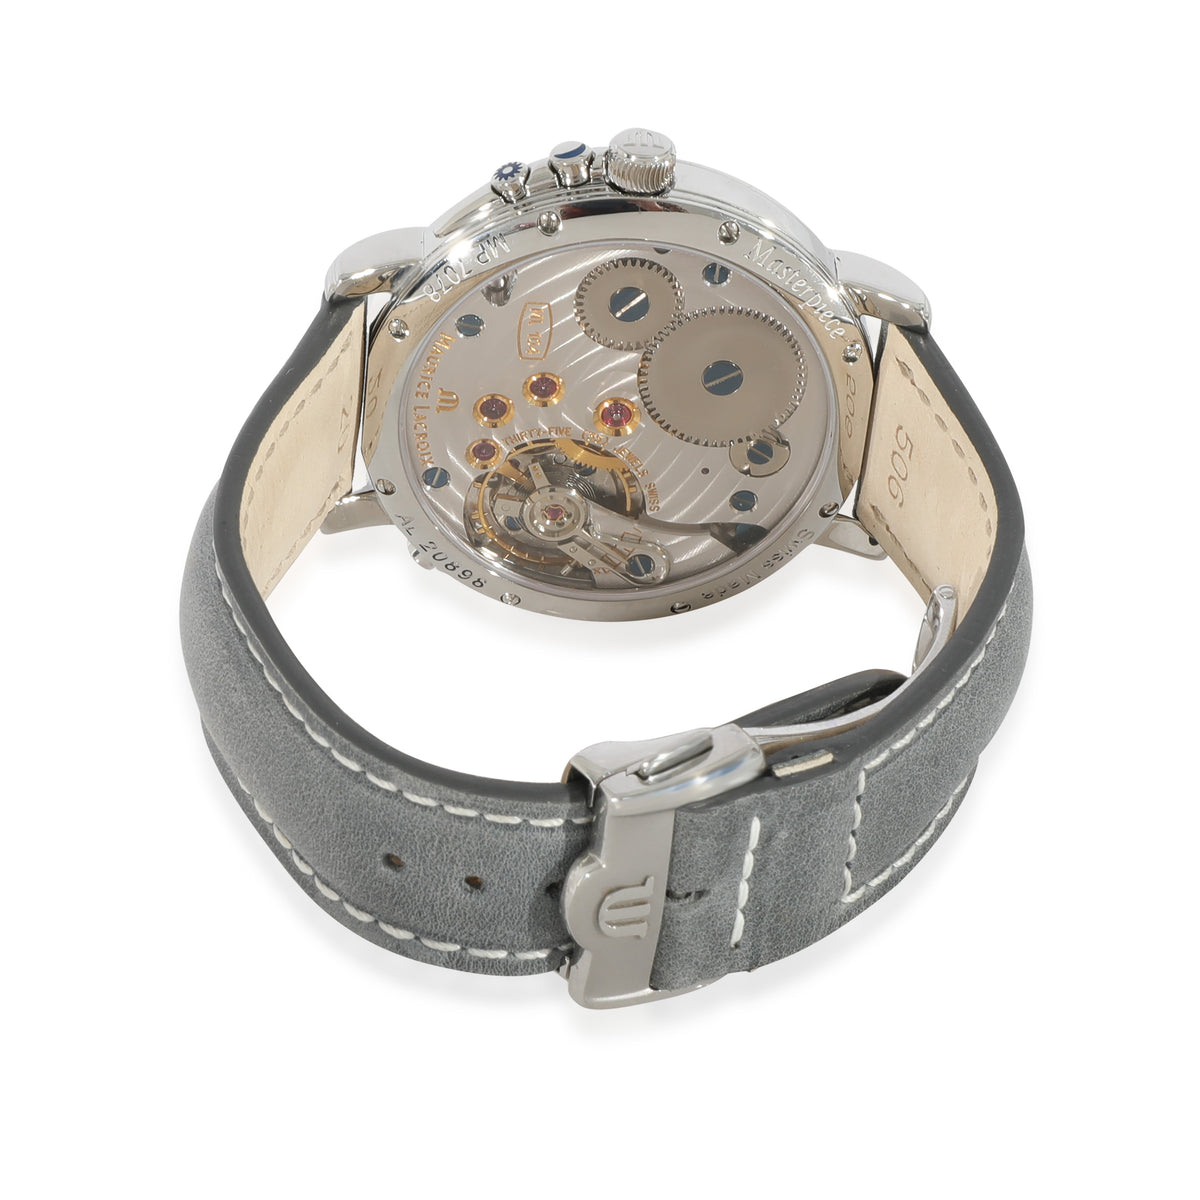 Masterpiece Lune Retrograde MP7078 Men's Watch in  Stainless Ste